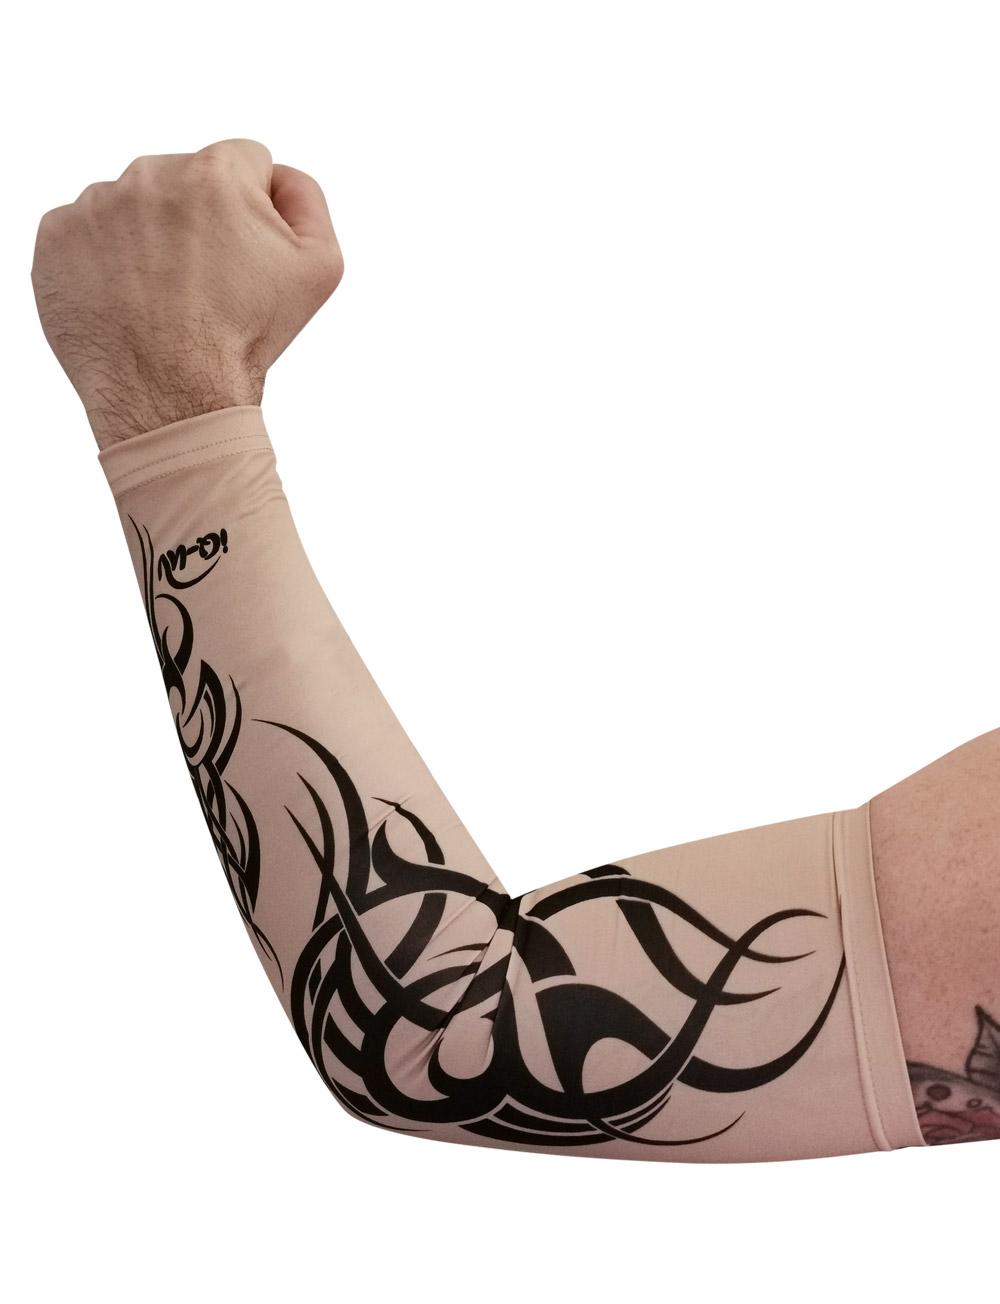 UV Armlinge Tattoo Beige am arm